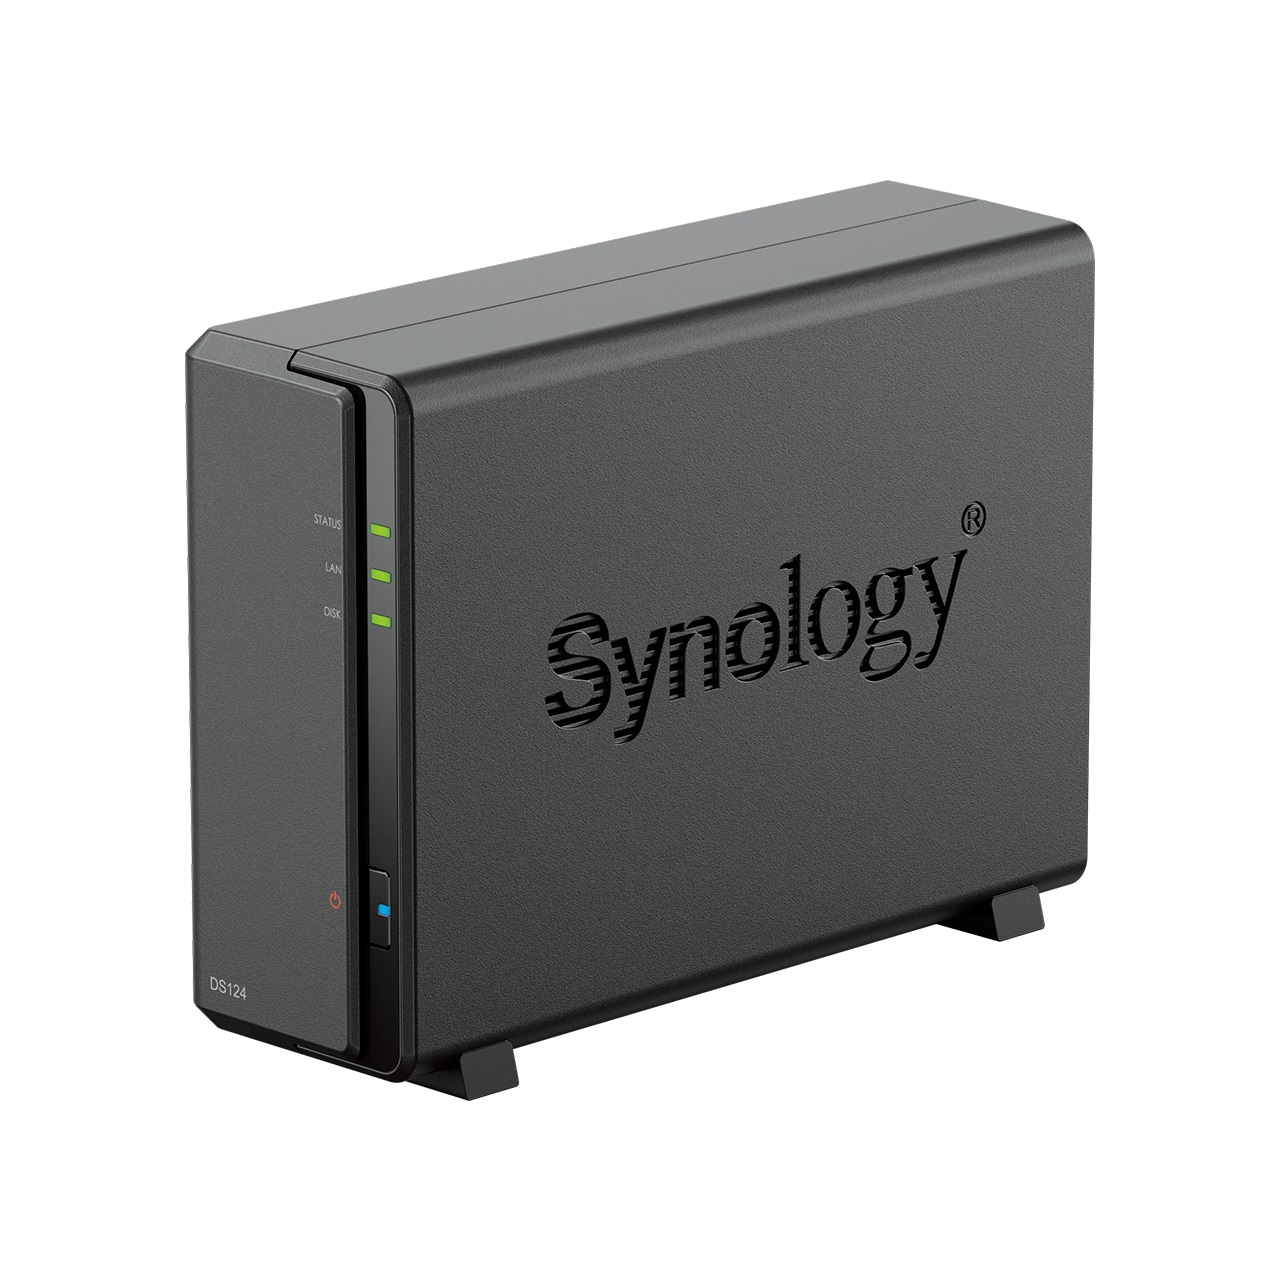 1x intern DS124 HAT Synology 4 TB SYNOLOGY mit PLUS Zoll 4TB Festplatte 4TB 3,5